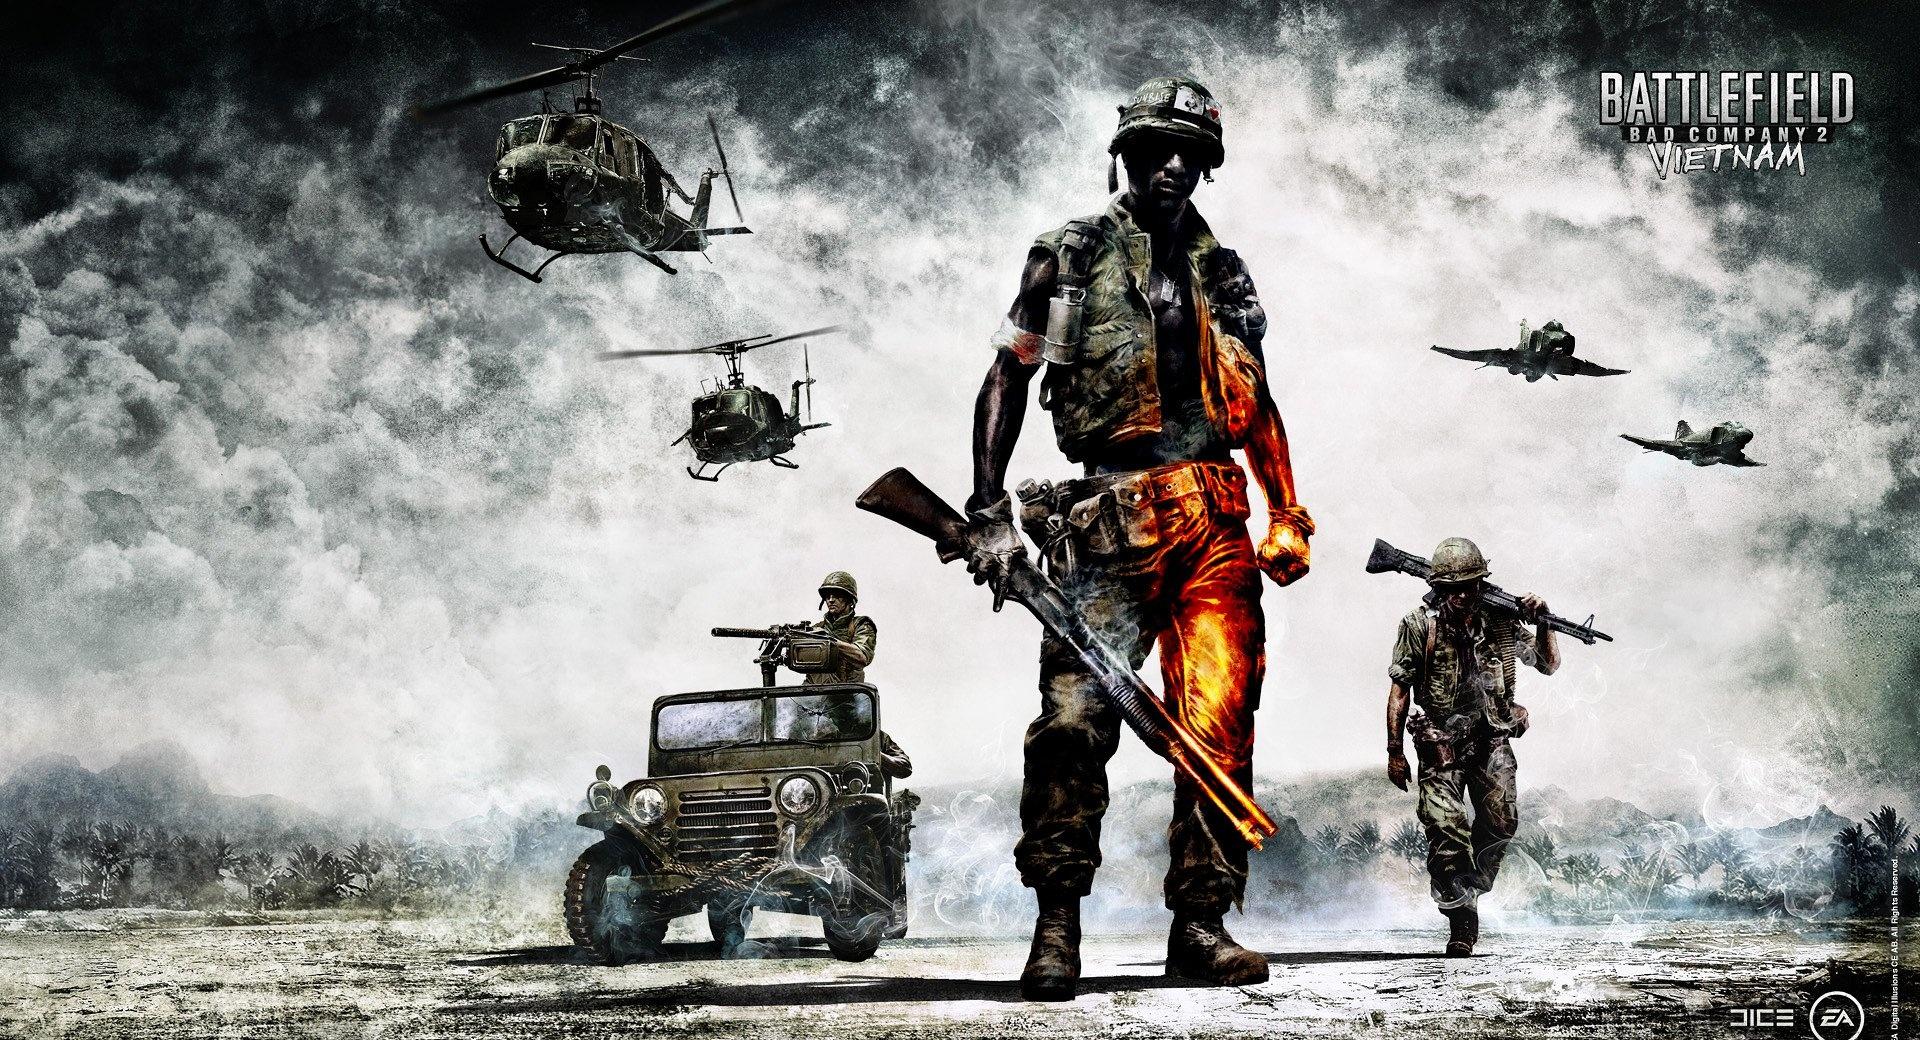 Battlefield Bad Company 2 Vietnam at 1024 x 1024 iPad size wallpapers HD quality